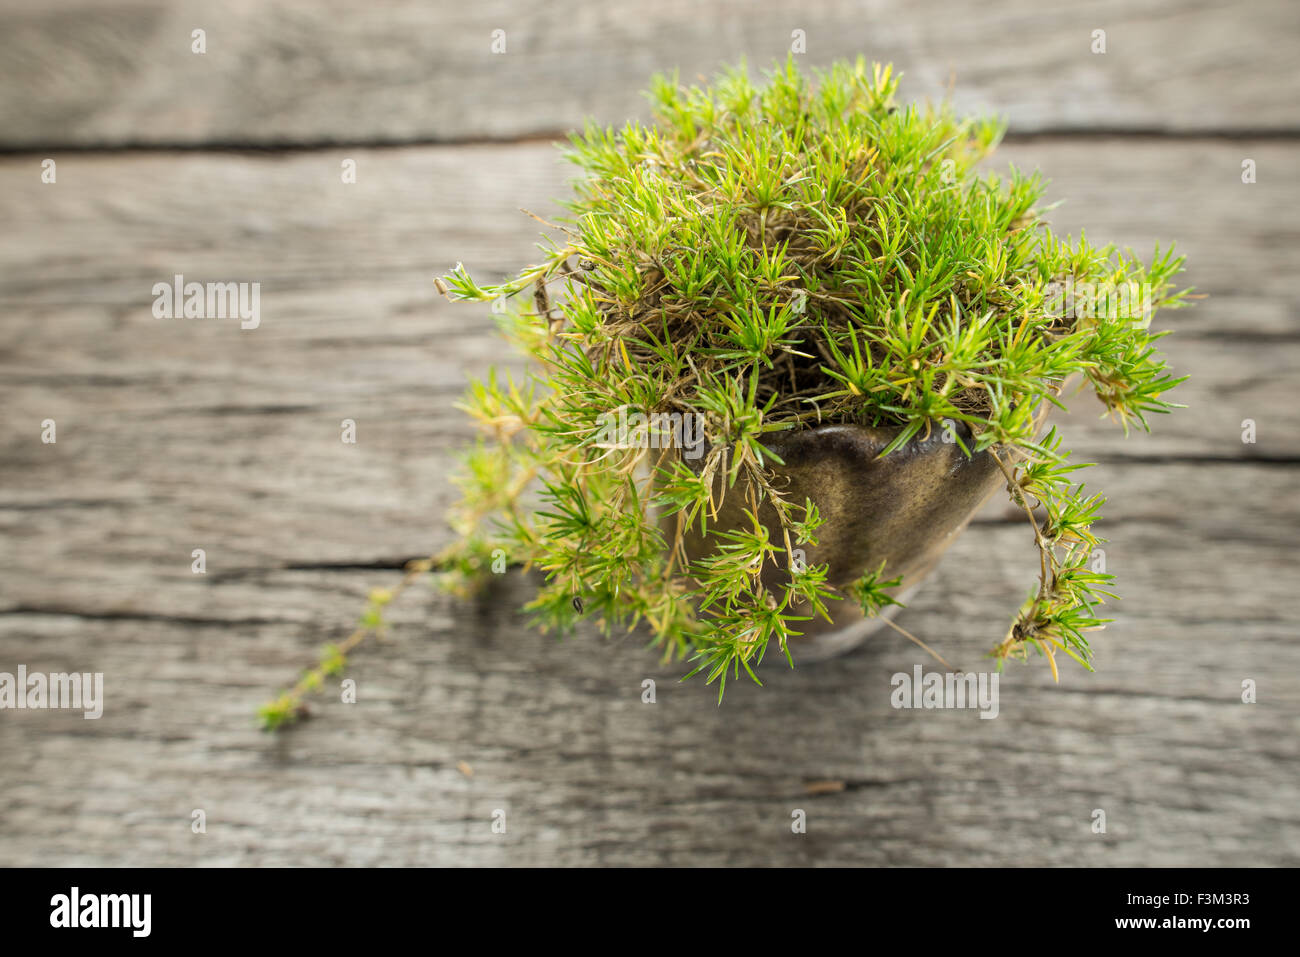 Irish moss (Sagina subulata) in a pot Stock Photo